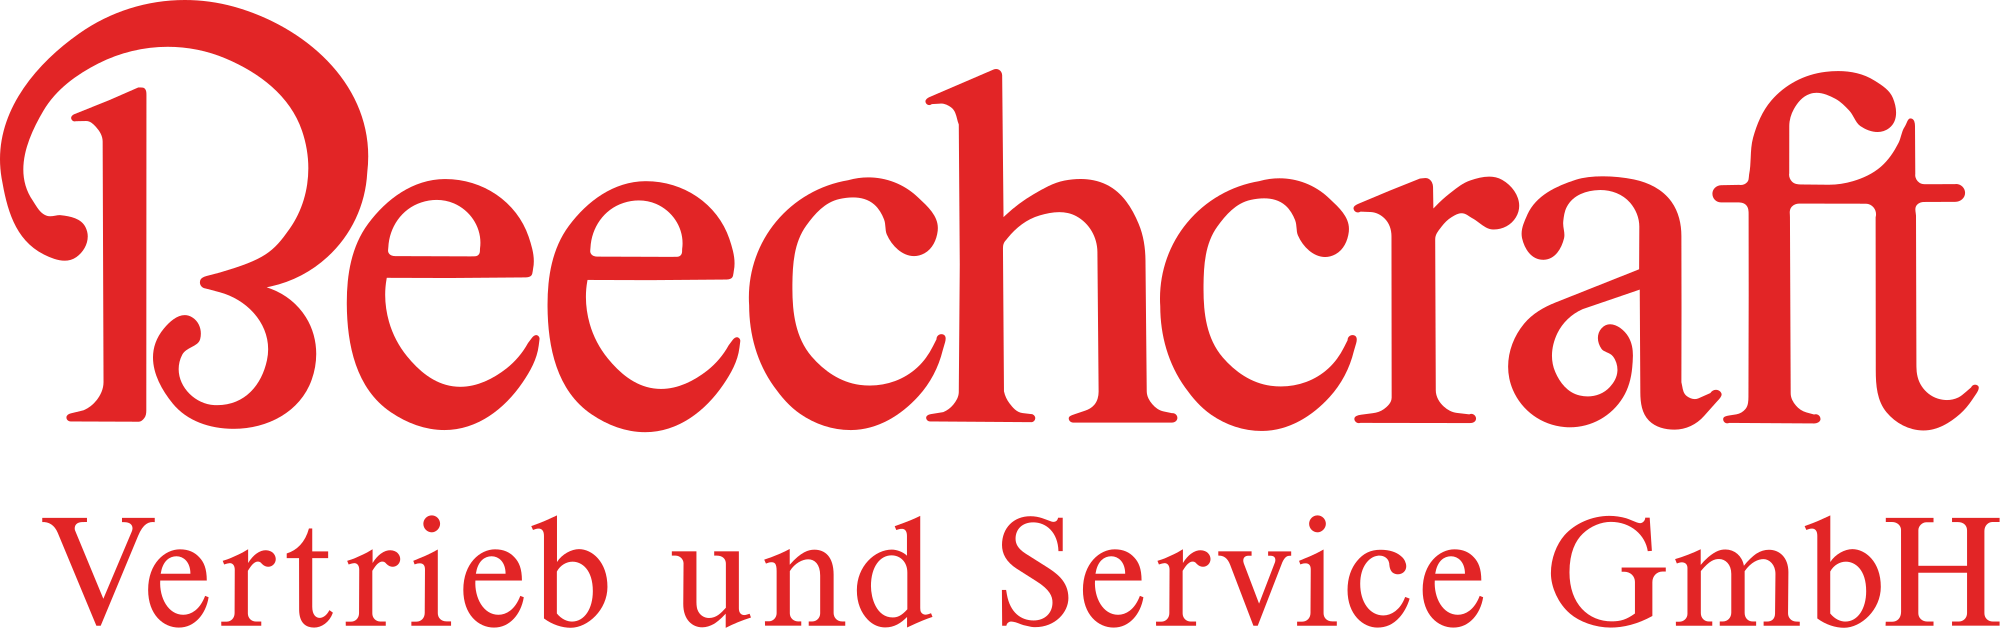 Beechcraft Logo - File:Beechcraft logo and slogan.svg - Wikimedia Commons